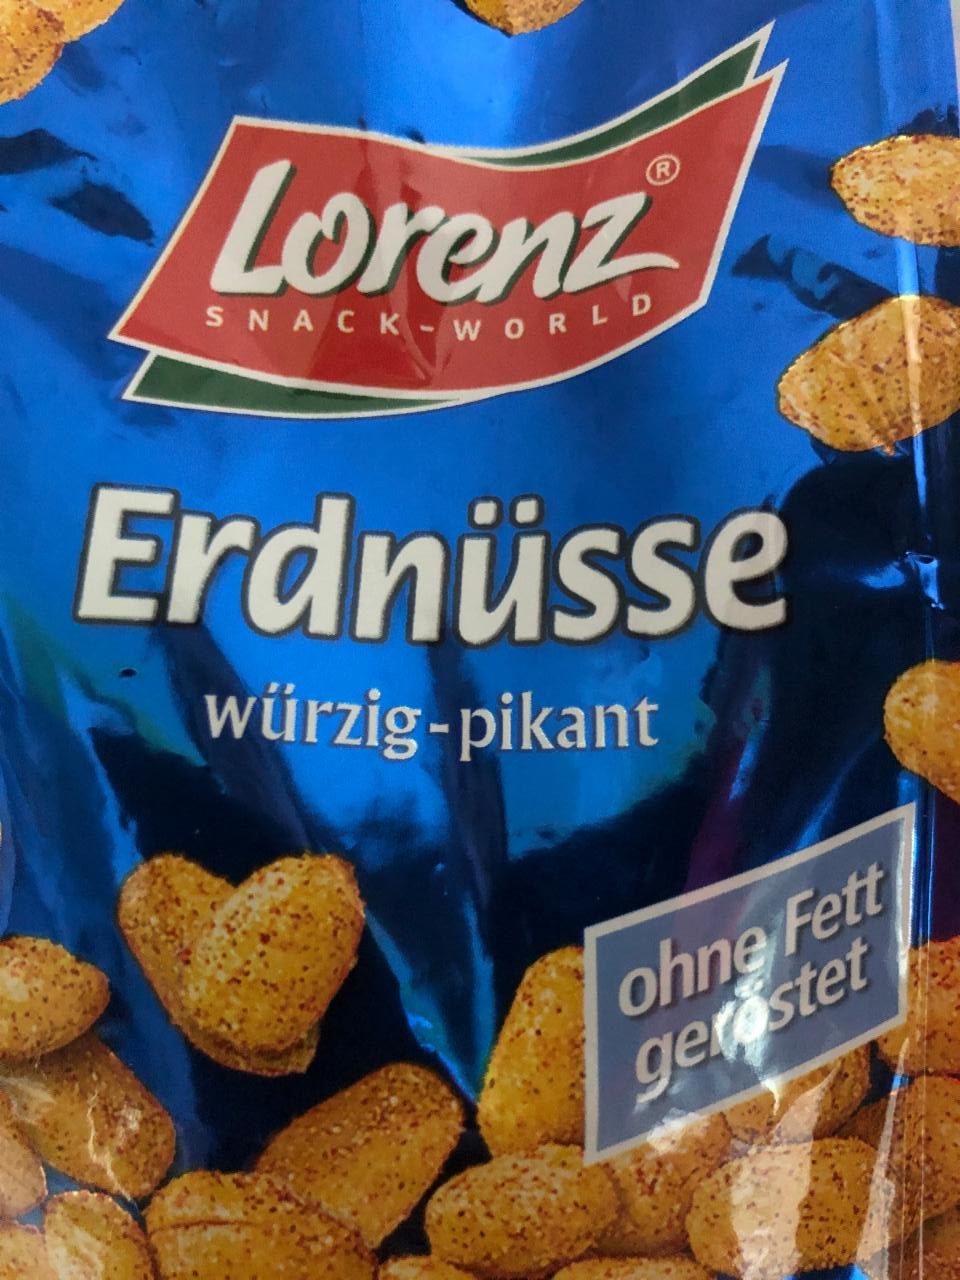 Fotografie - Erdnüsse würzig pikant ohne Fett geröstet Lorenz